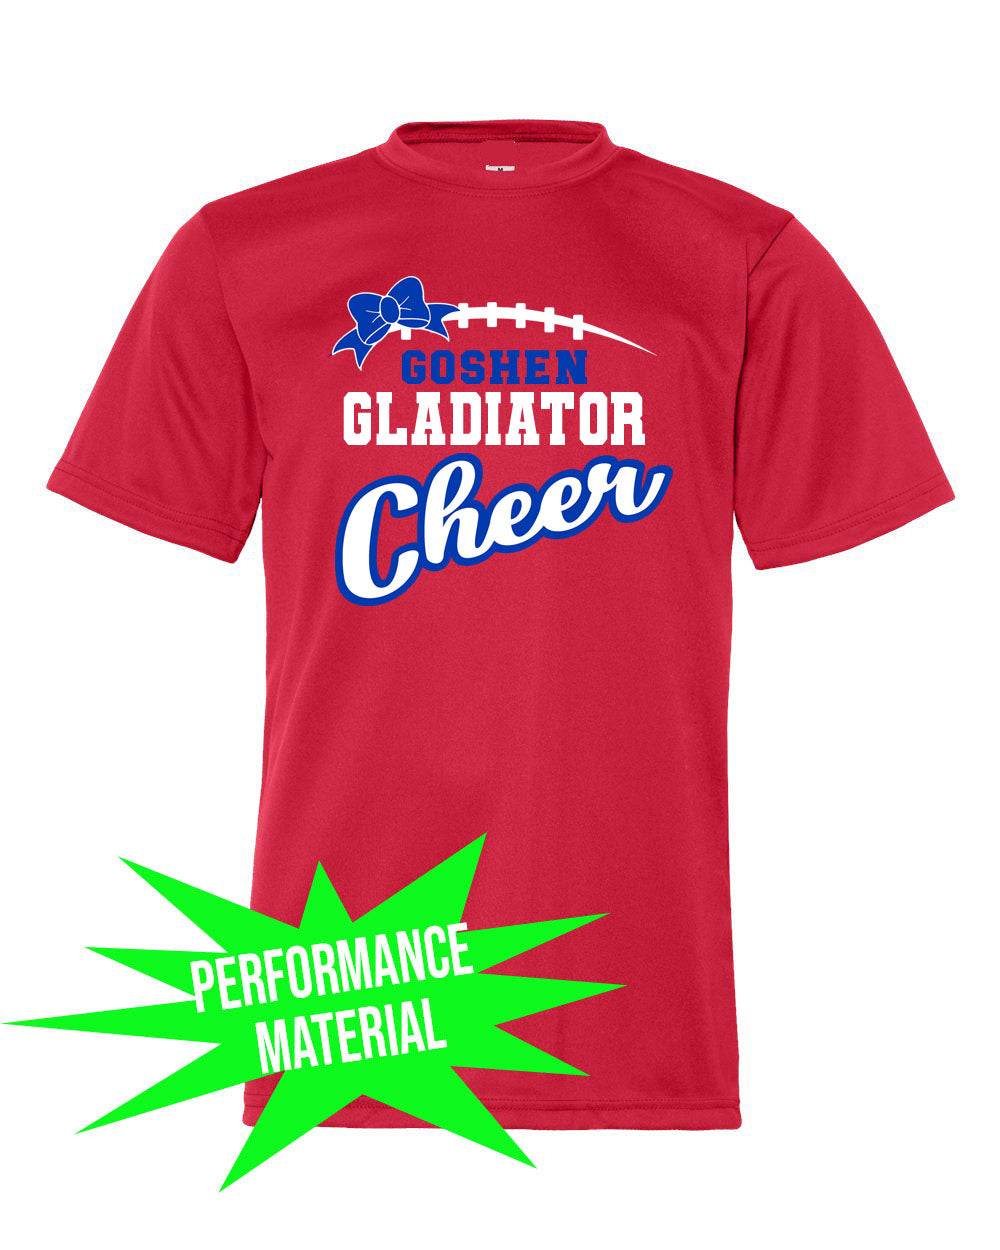 Goshen Cheer Performance Material design 13 T-Shirt